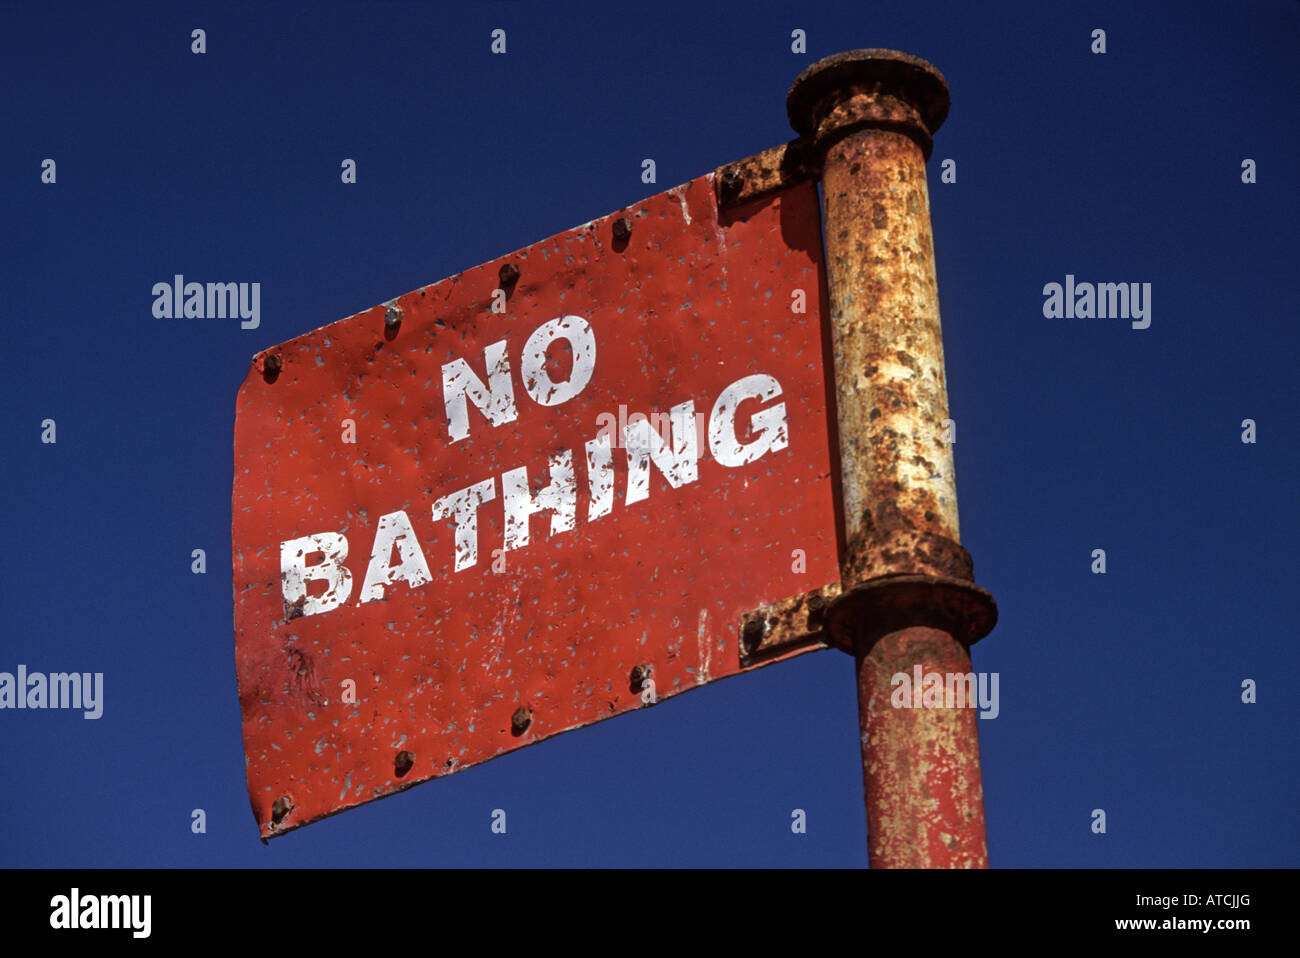 'No Bathing' sign at beach Stock Photo